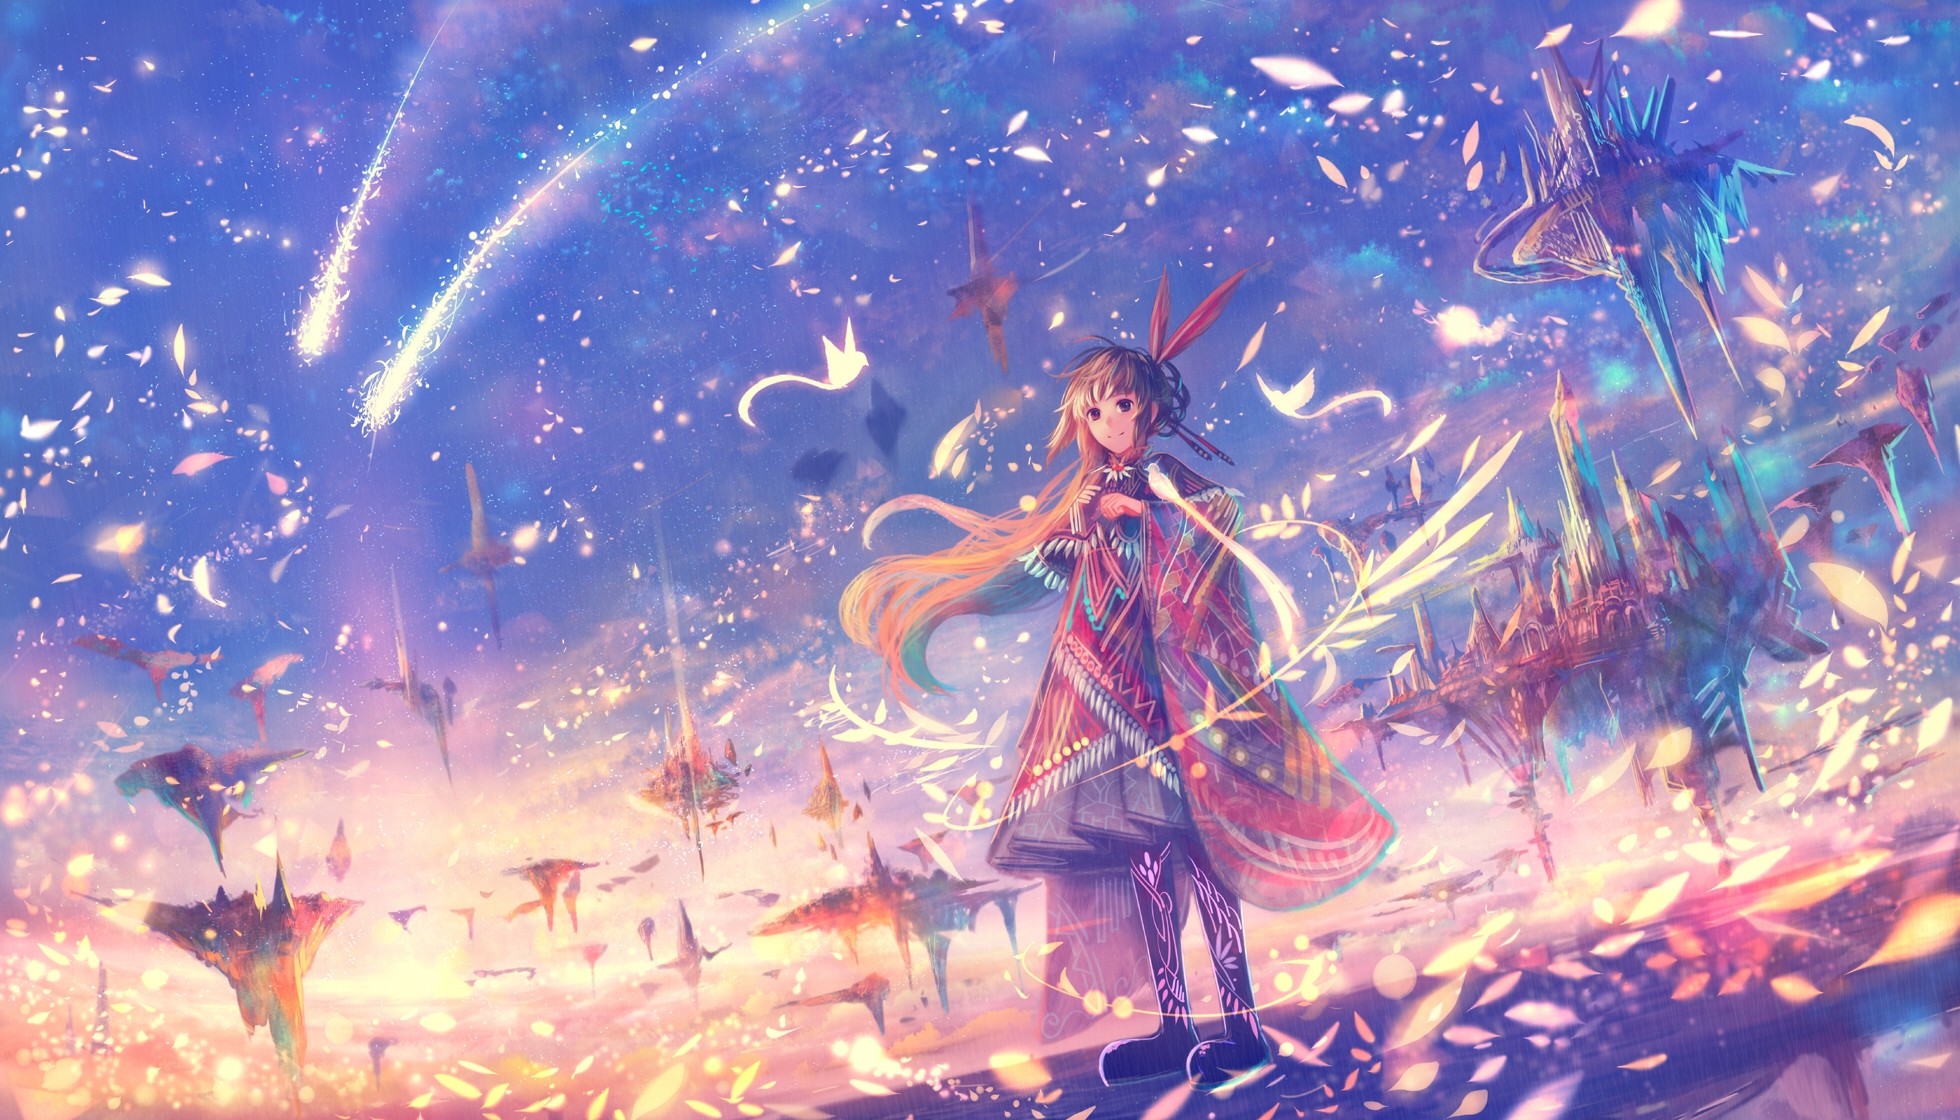 anime fantasy wallpaper,cg artwork,illustration,sky,fictional character,art